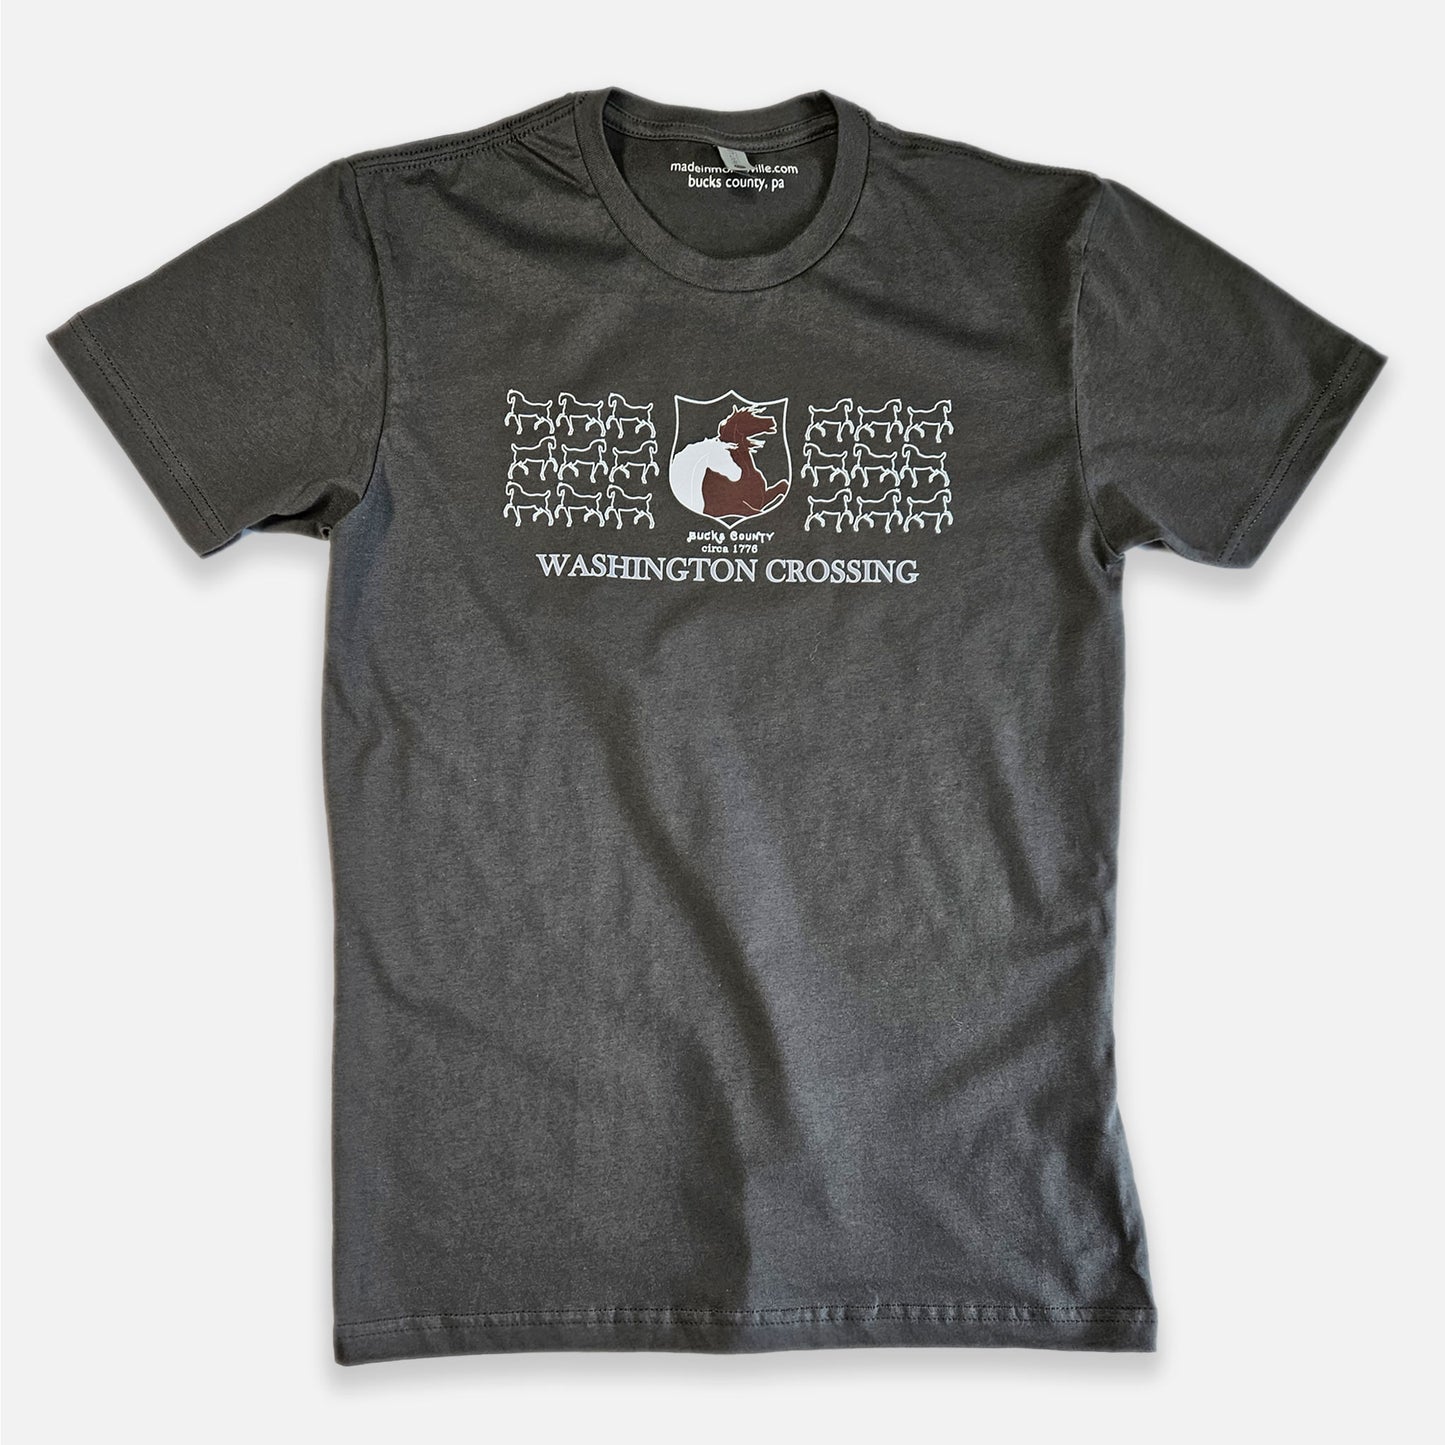 George Washington's horses / Washington Crossing graphic T-shirt - Dark Grey